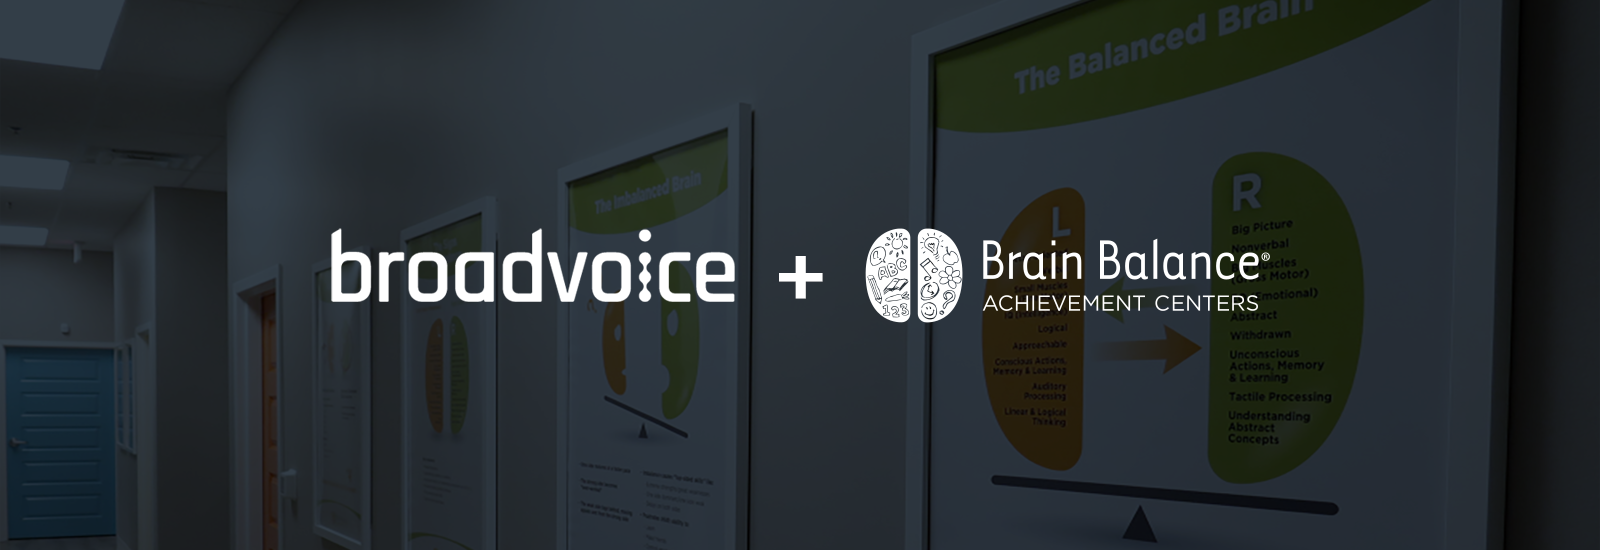 broadvoice and brain balance banner text